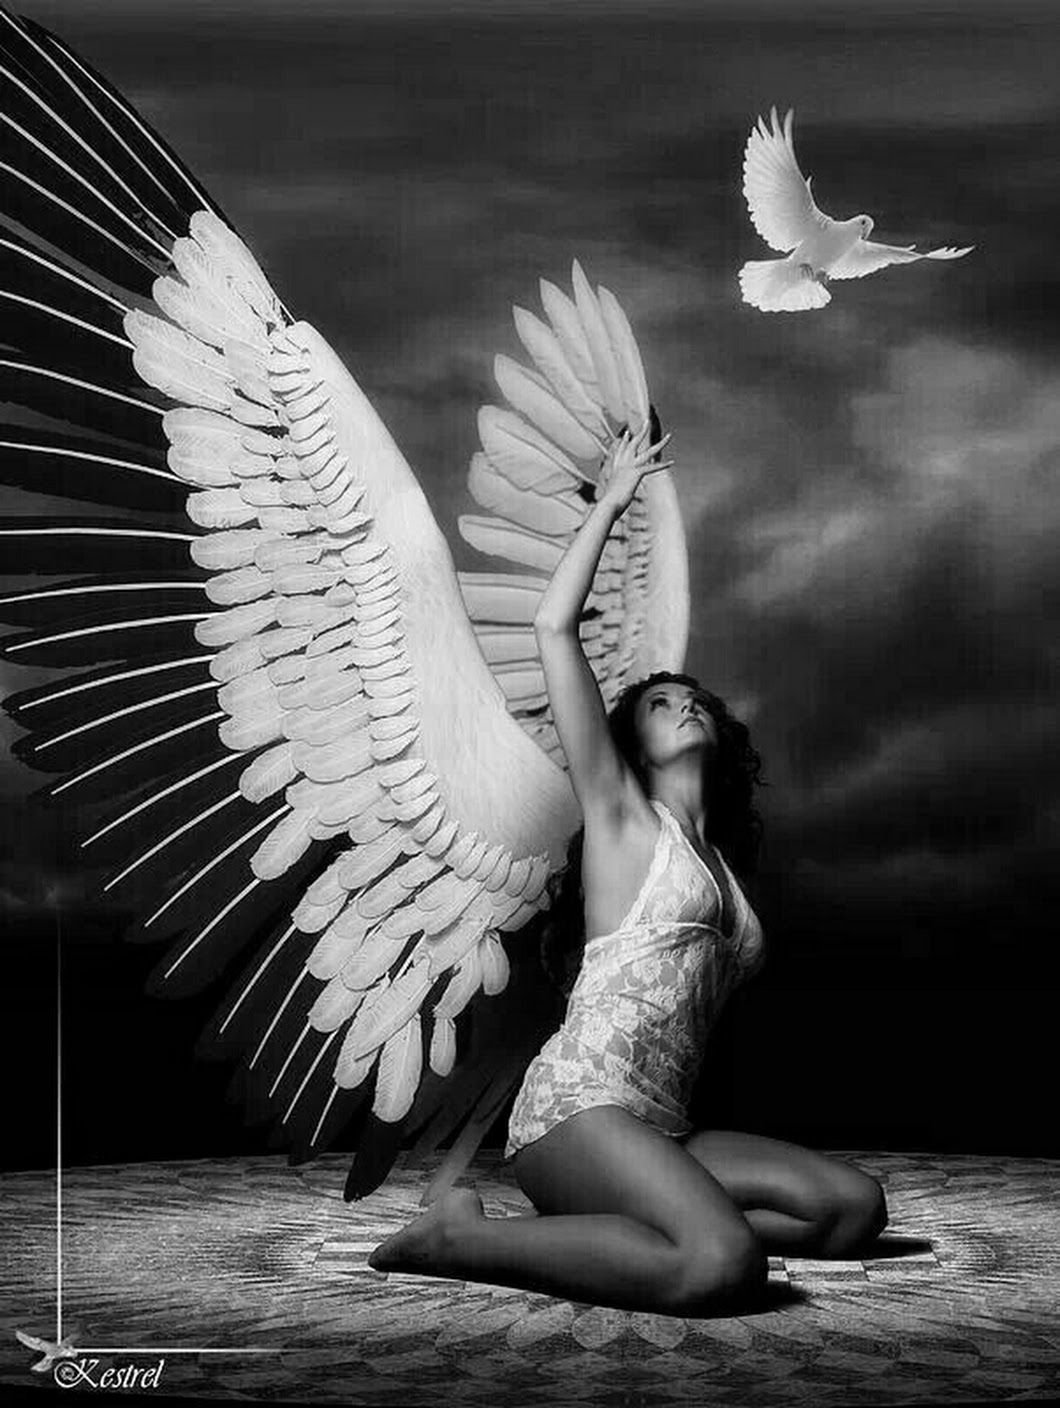 Angels women. Девушка - ангел. Женщина с крыльями. Девушка с крыльями ангела. Девушка ангел с крыльями.